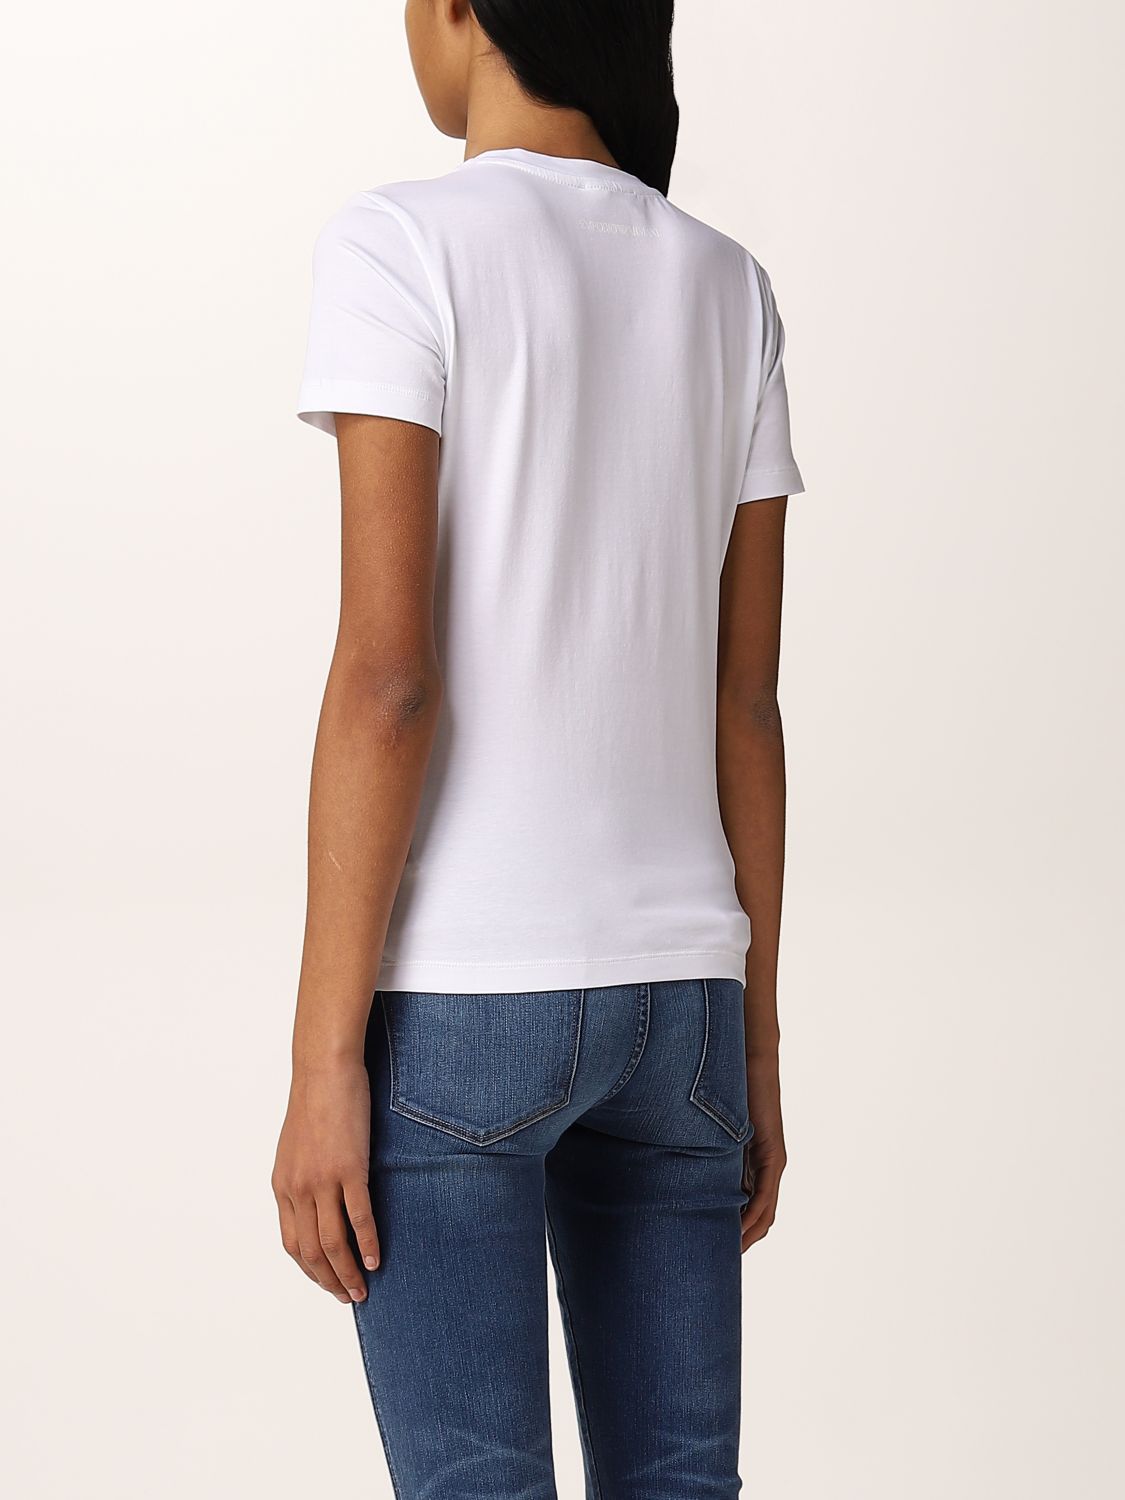 T Shirt Donna Firmate - Magliette Sportive Shopping Online